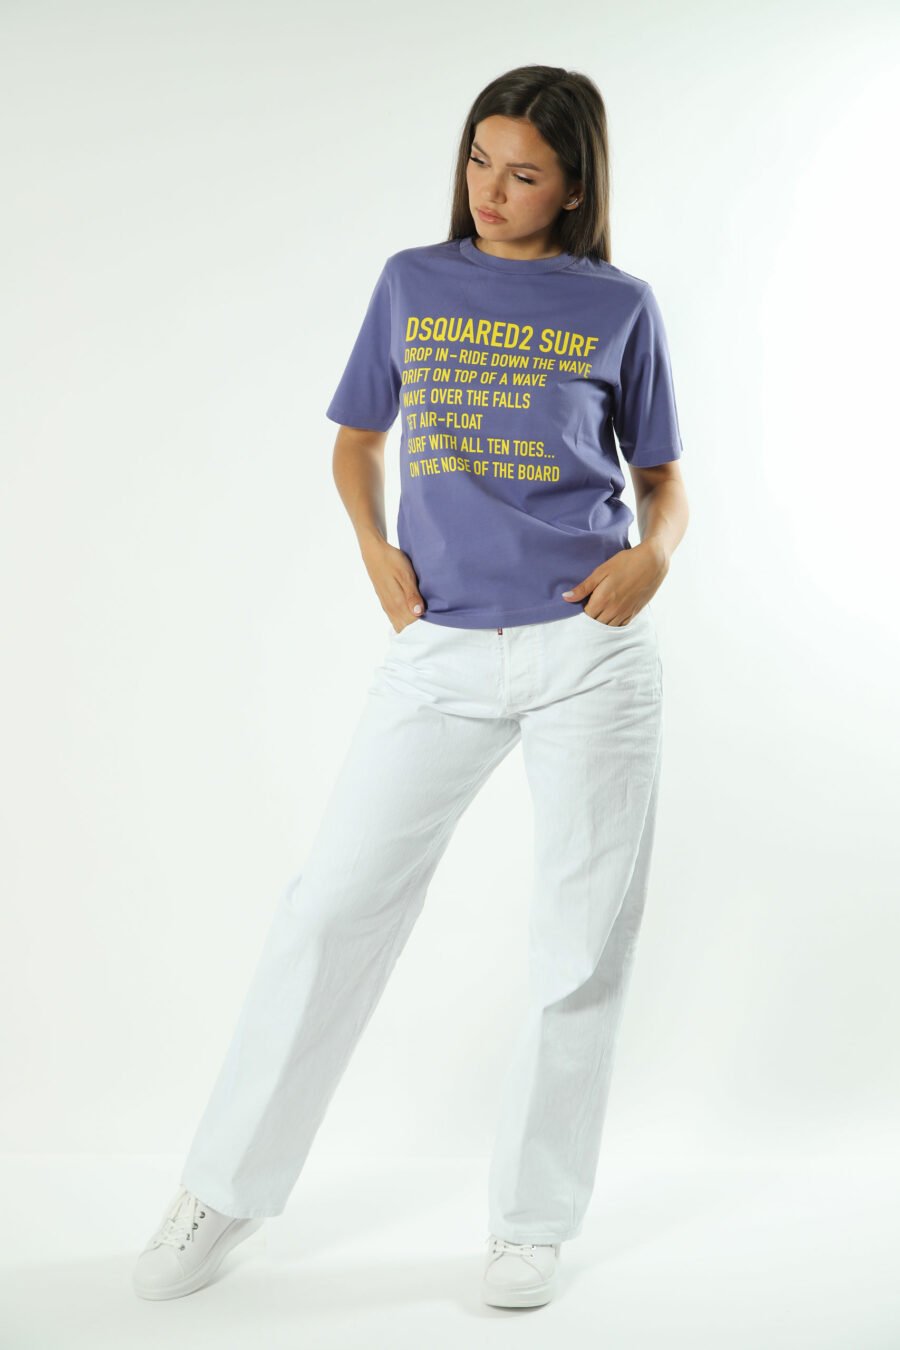 Fliederfarbenes T-Shirt mit gelbem Maxilogo-Text - 8052134537671 4